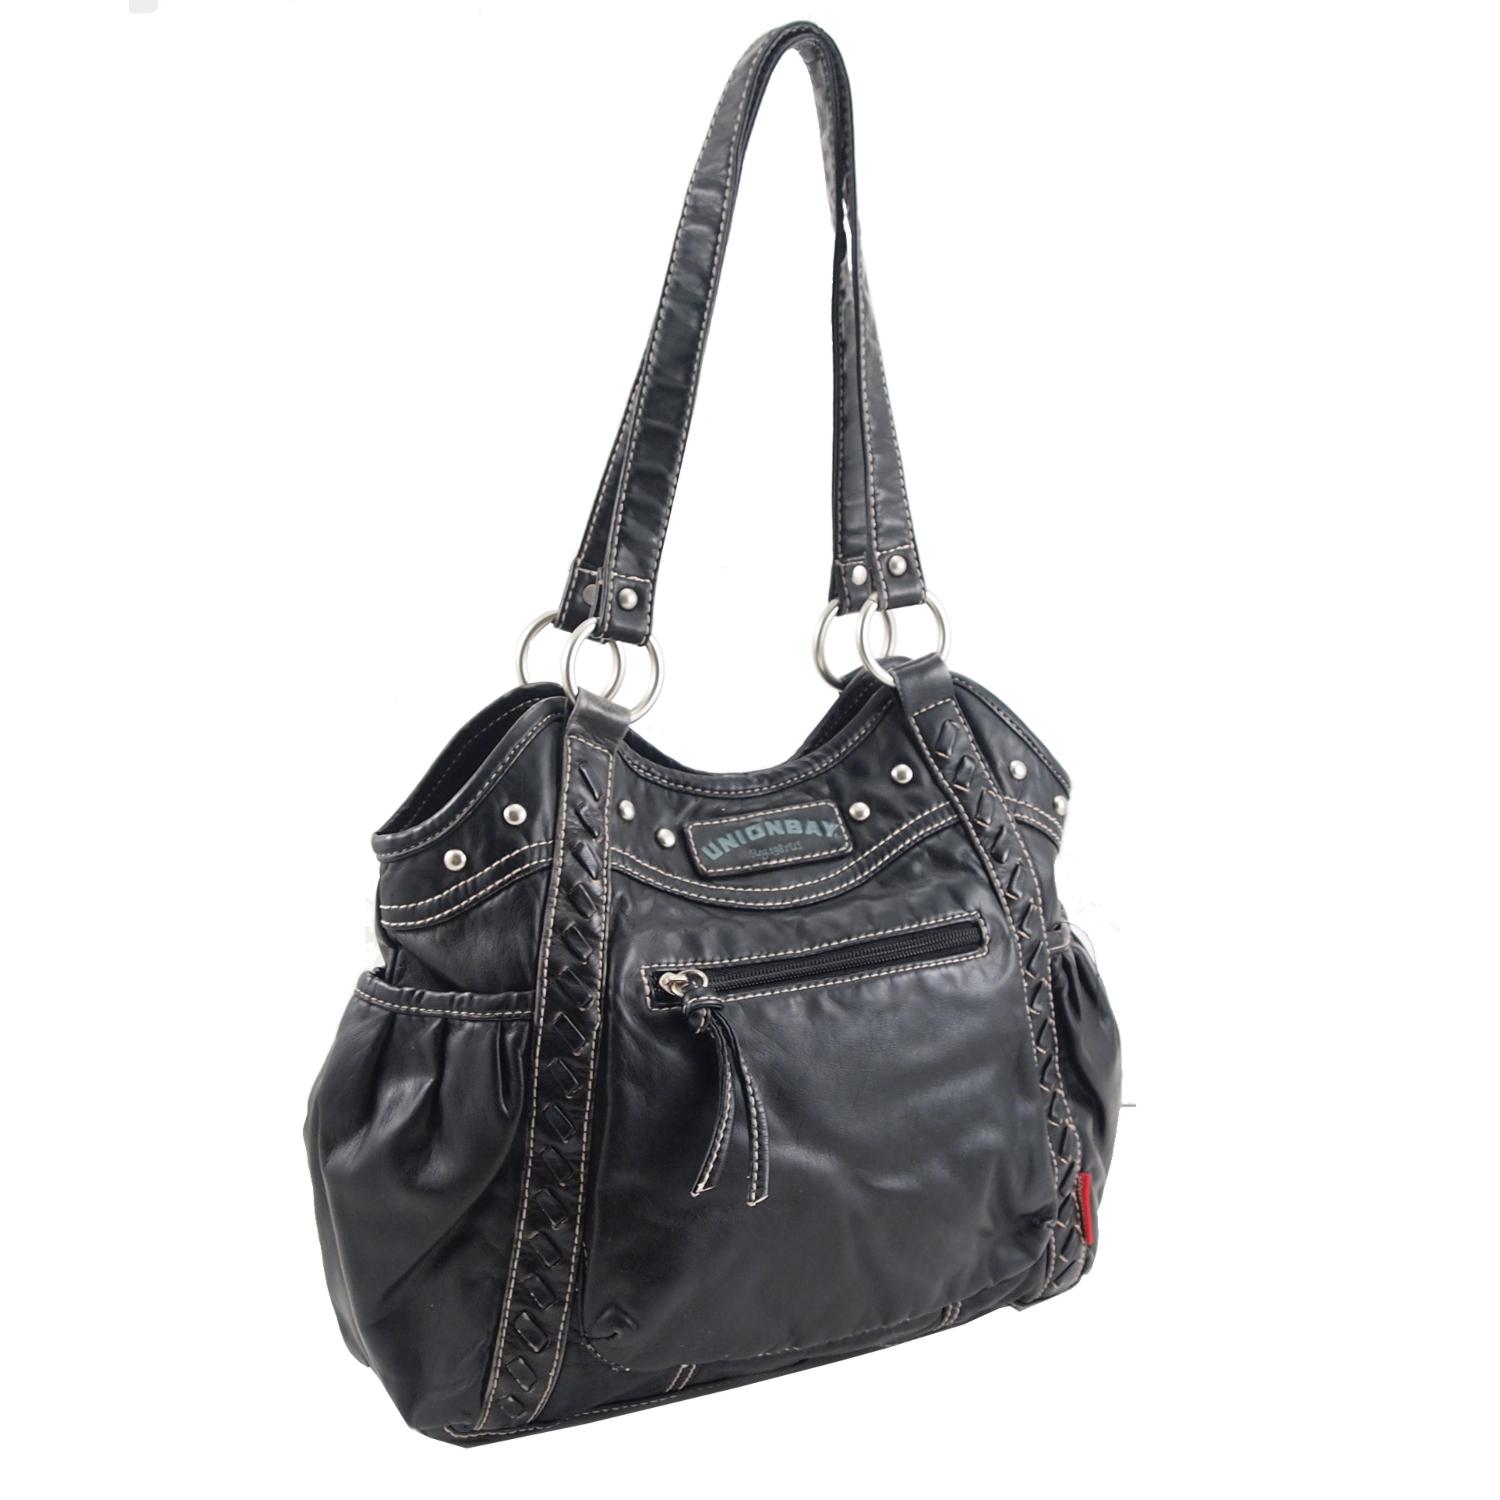 Unionbay Women's Studded Faux Leather Handbag Tote